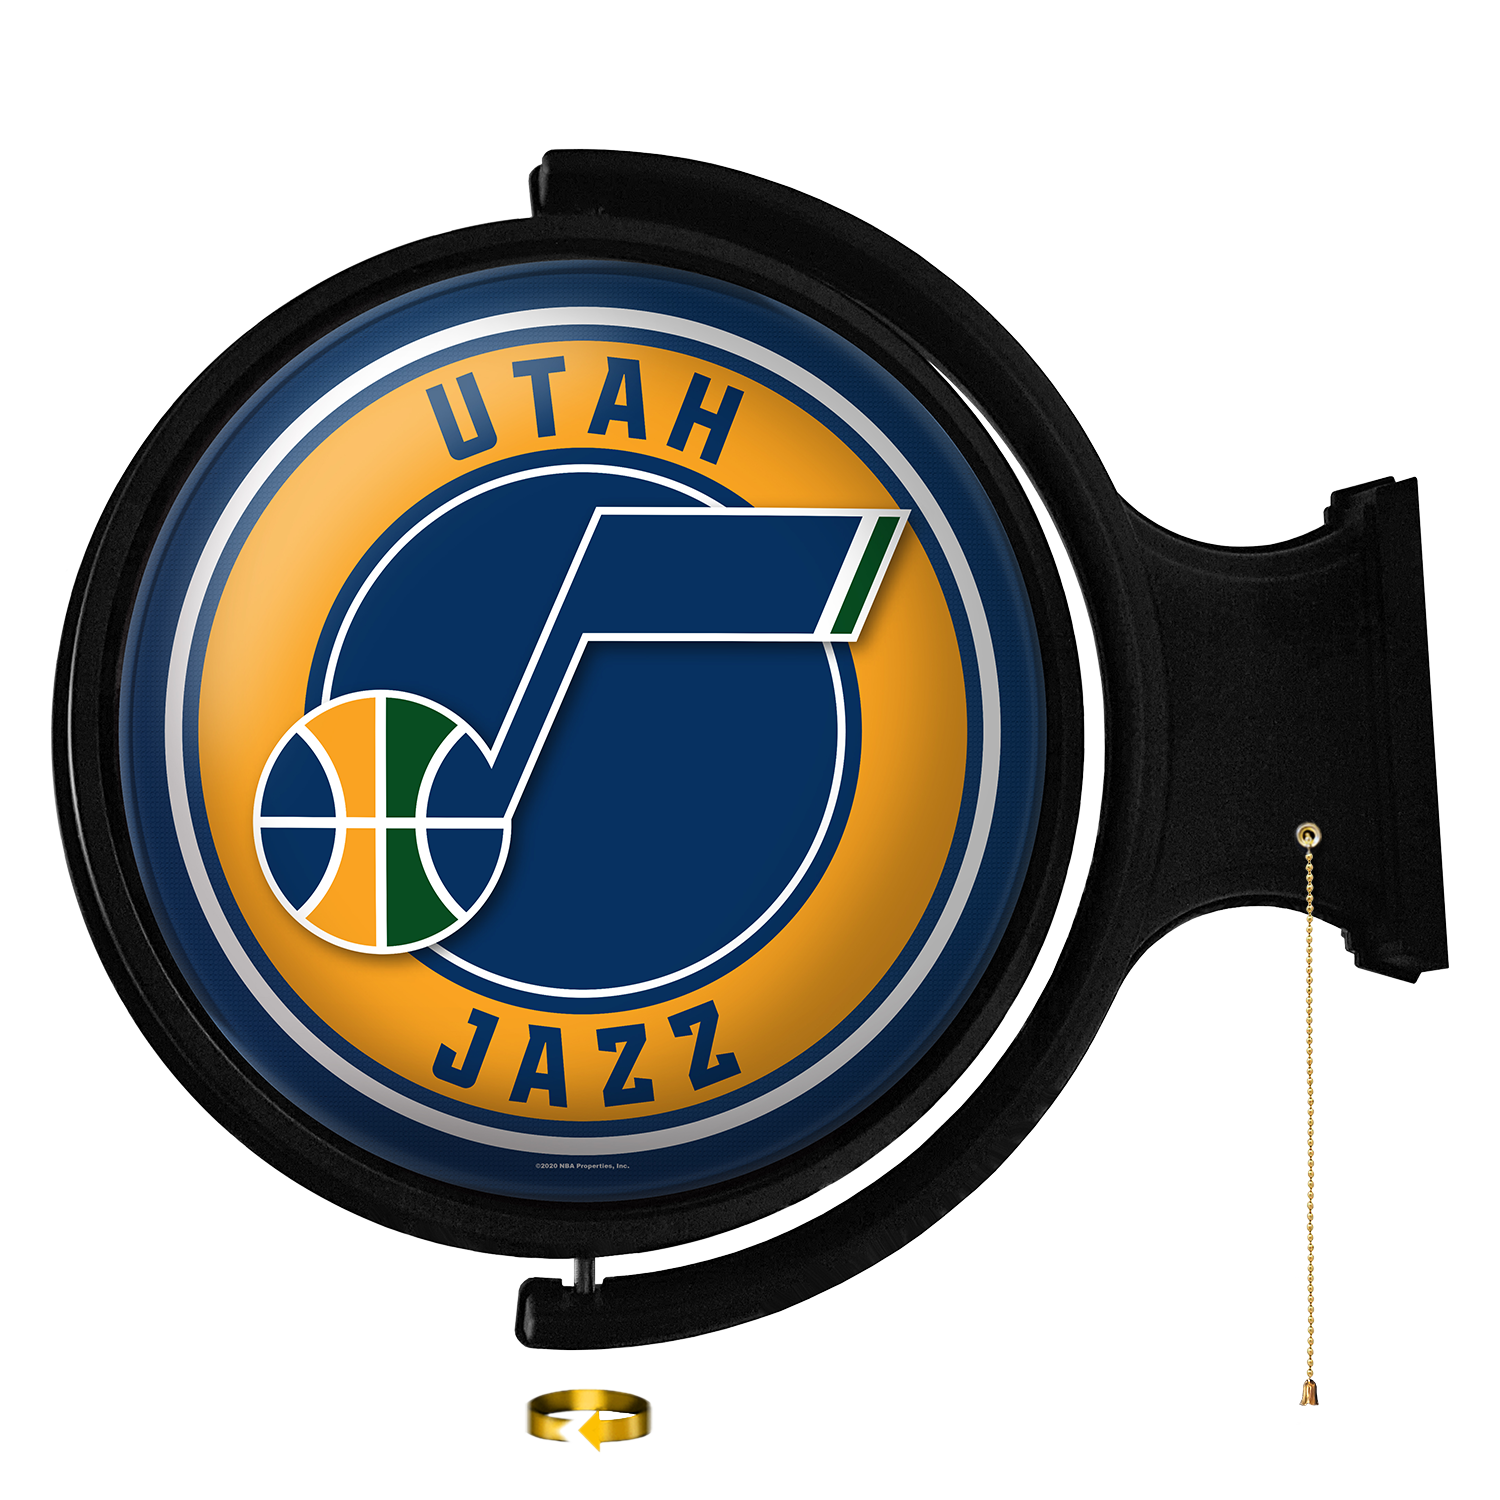 Utah Jazz: Original Round Rotating Lighted Wall Sign - The Fan-Brand